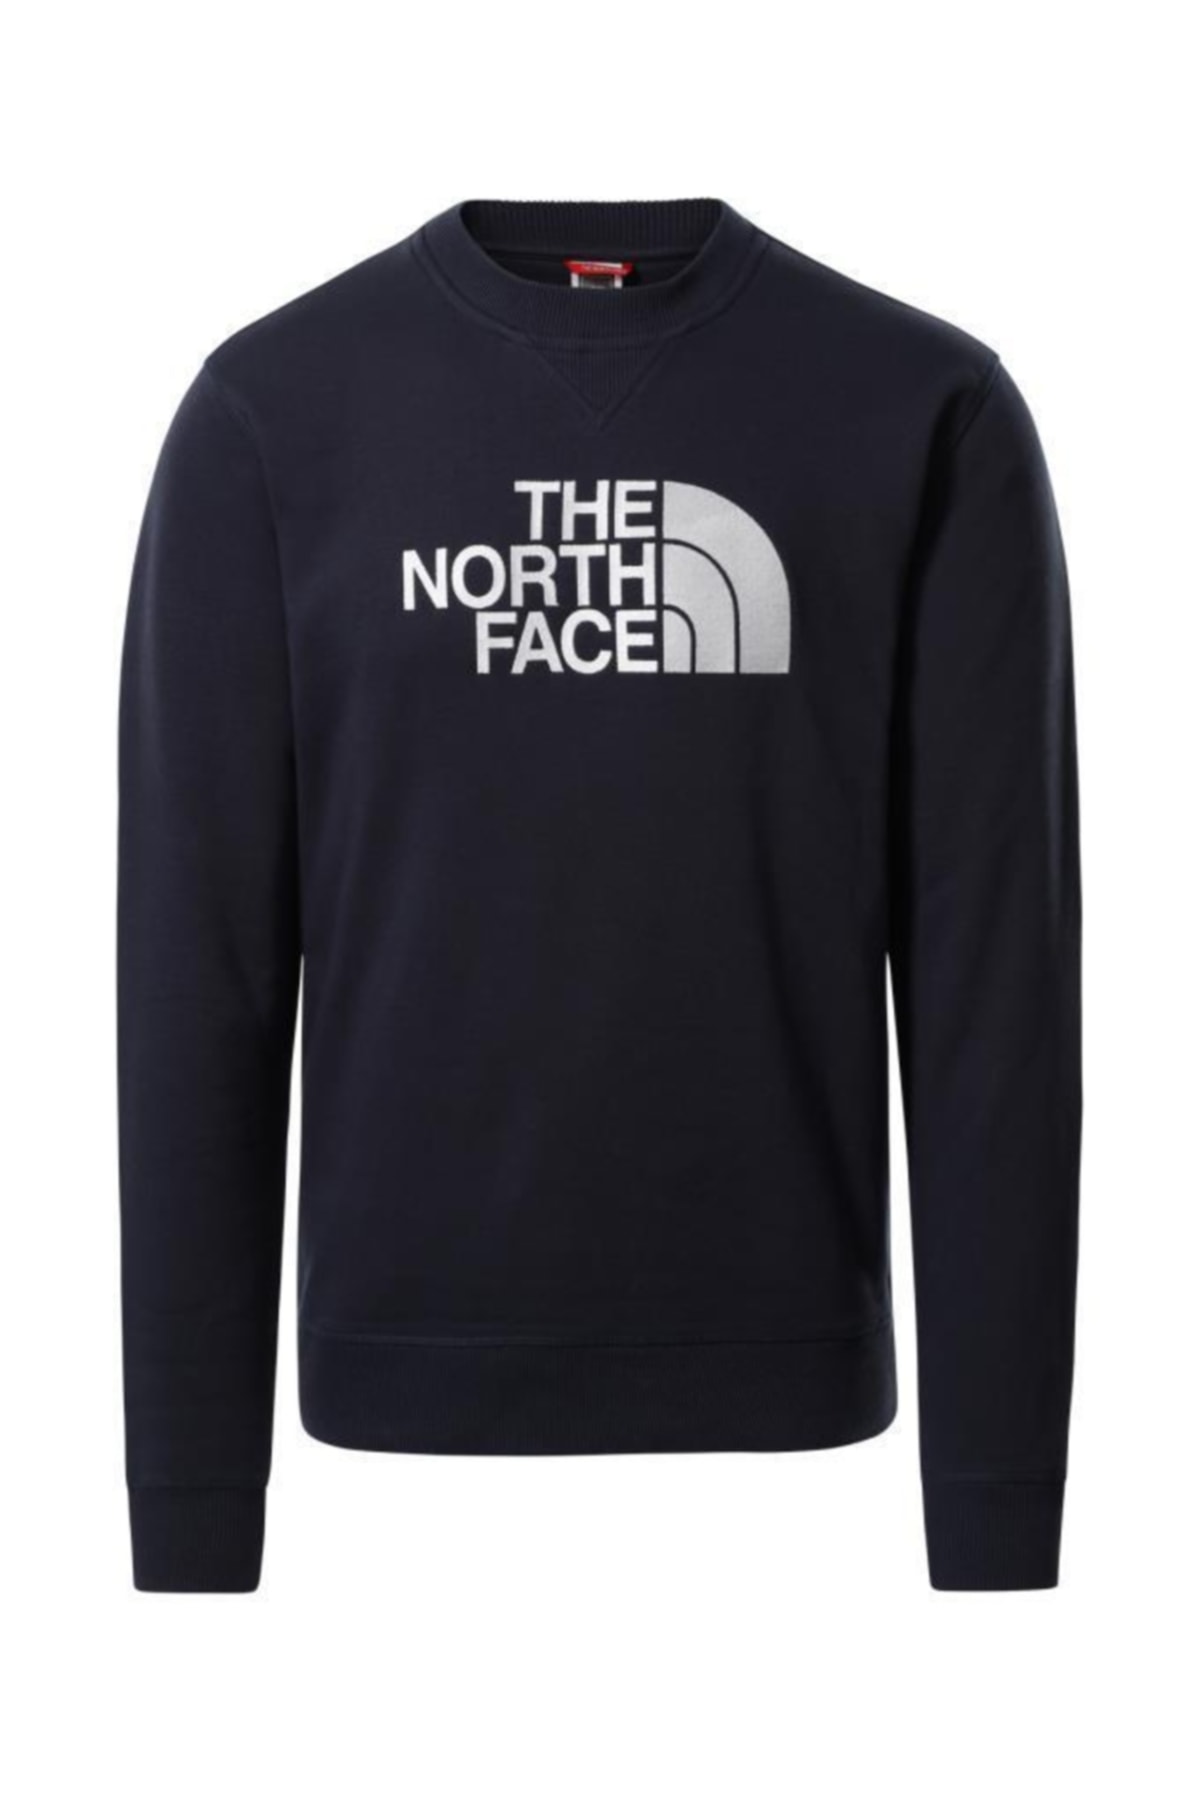 THE NORTH FACE Drew Peak Crew Erkek Sweatshirt Lacivert